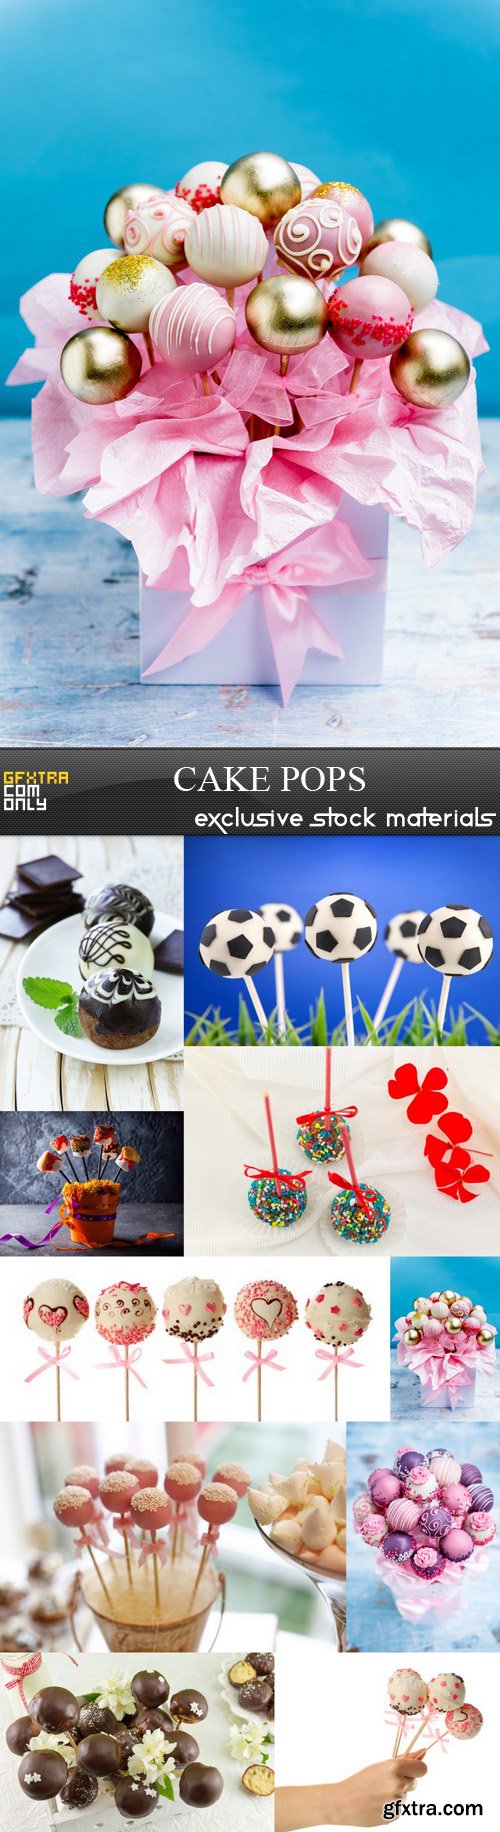 Cake Pops - 10 UHQ JPEG